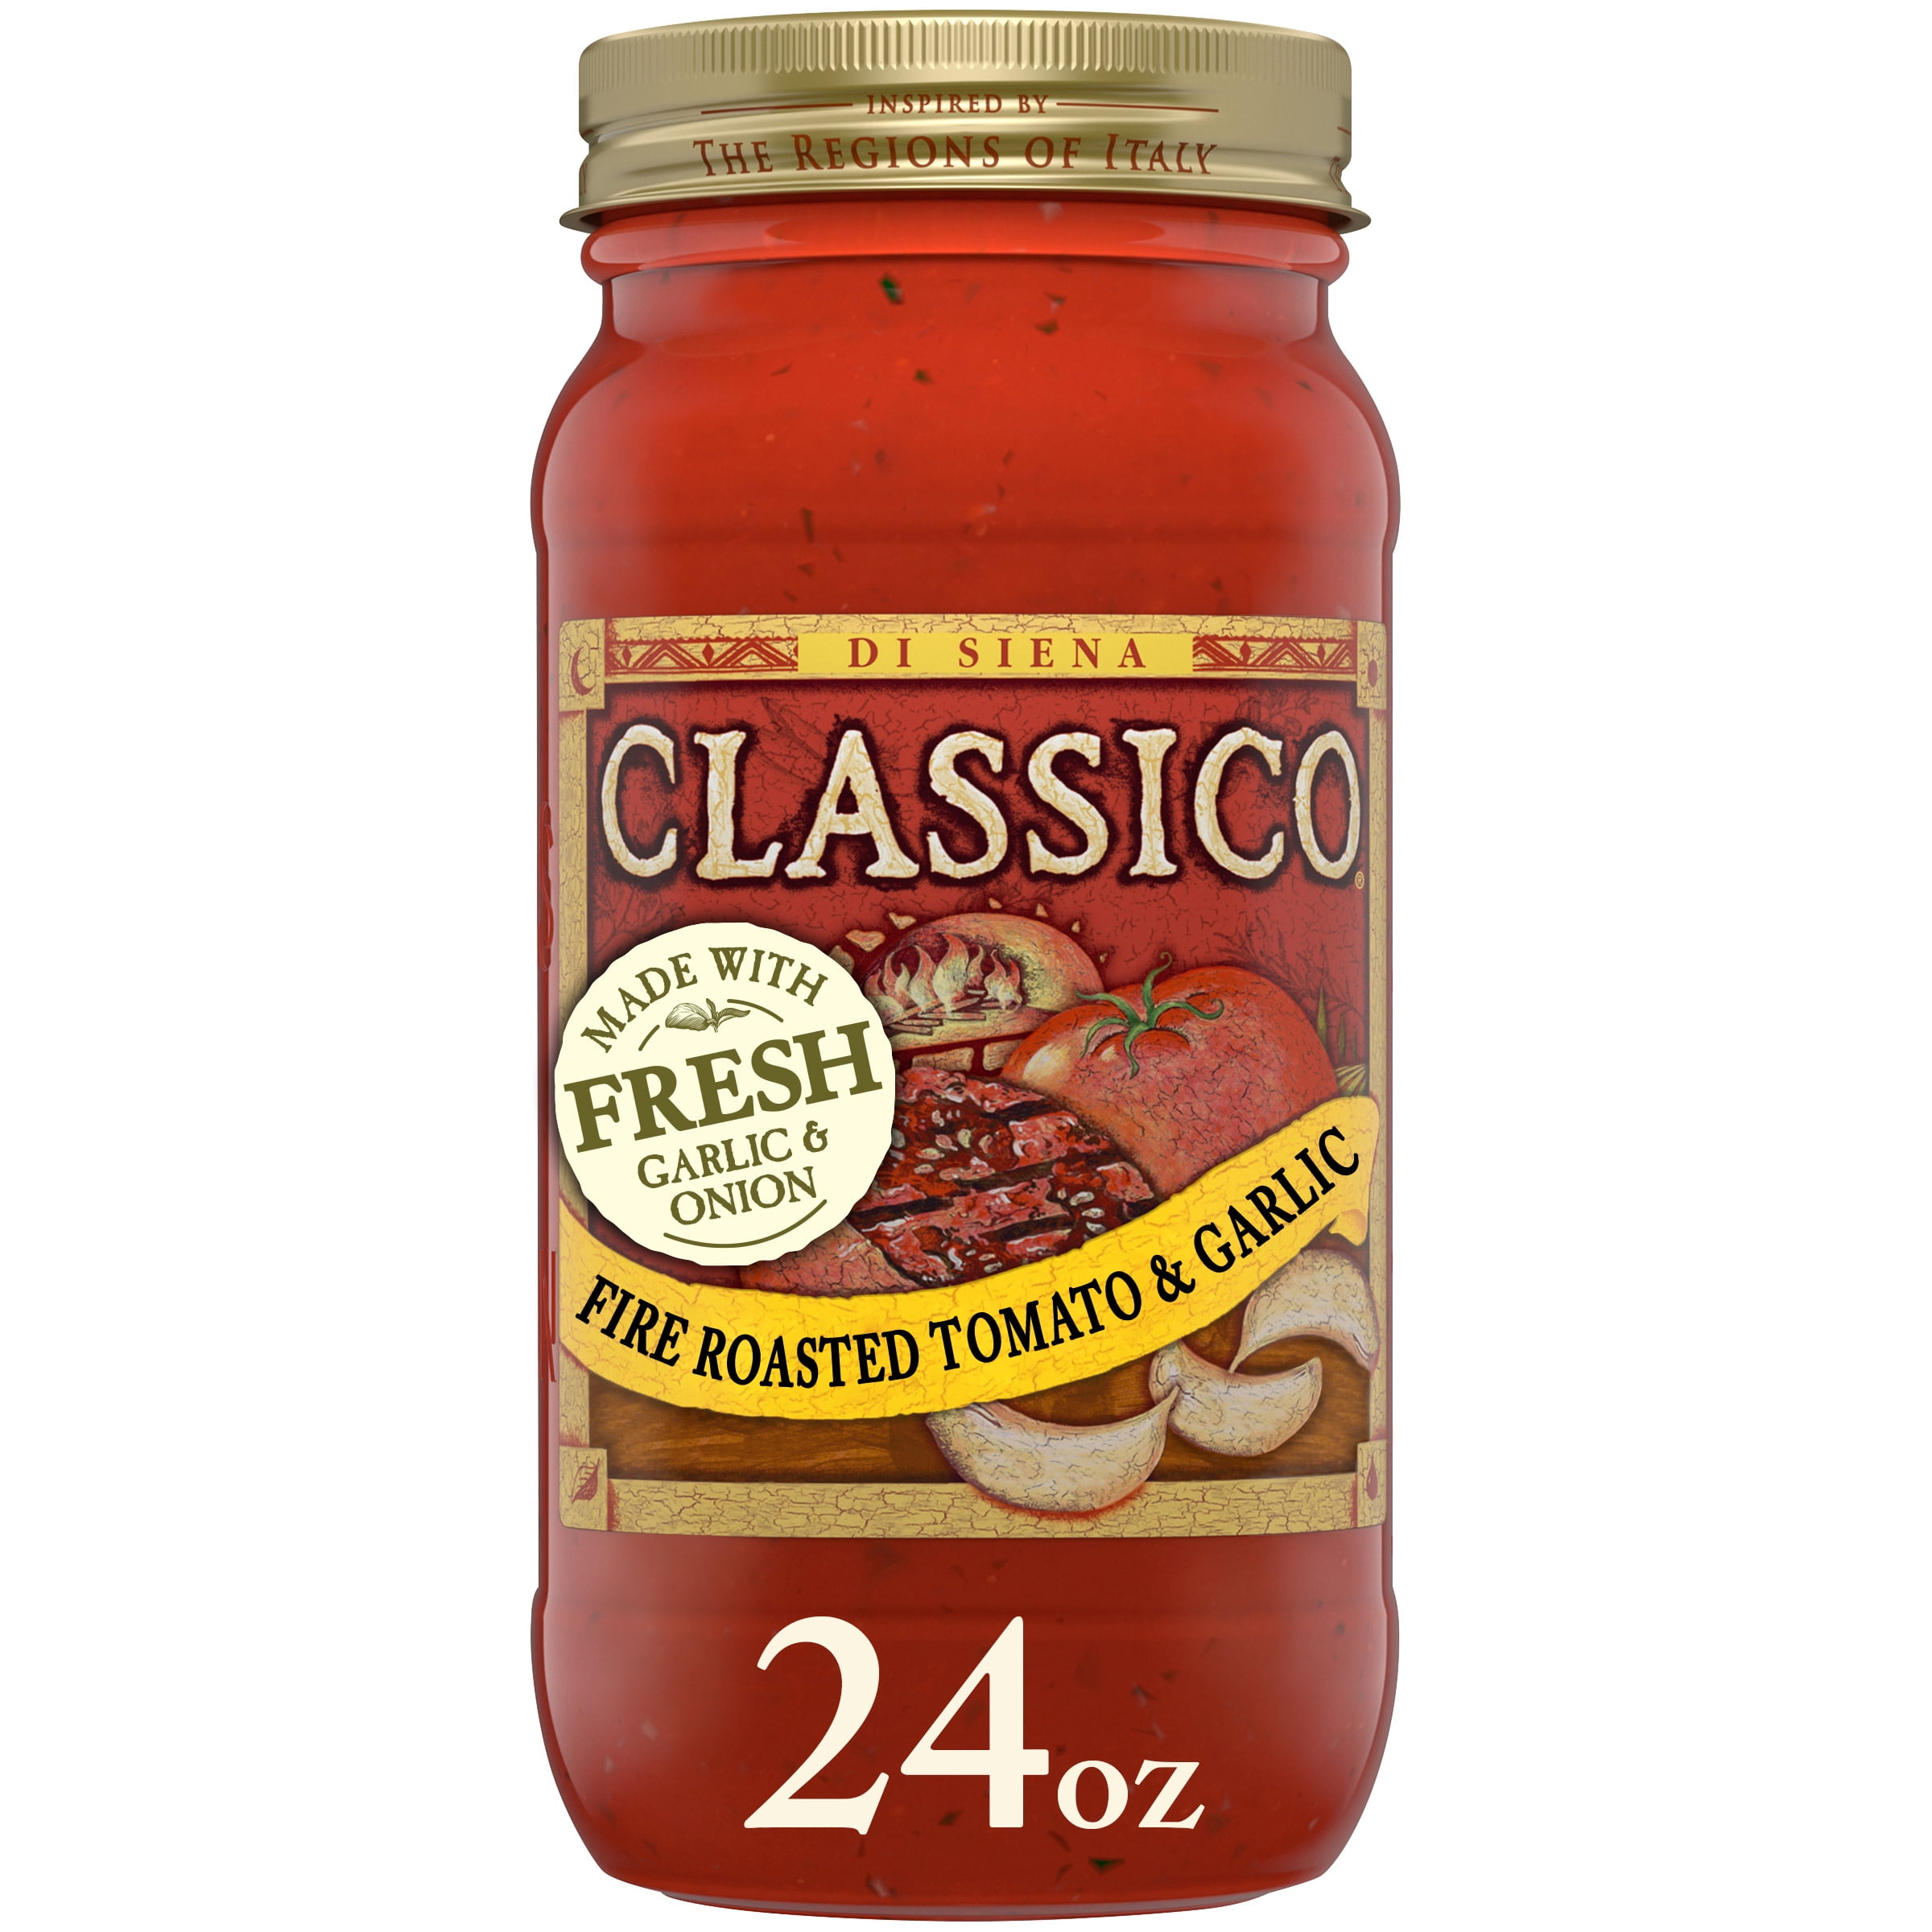 Classico Fire Roasted Tomato & Garlic Spaghetti Pasta Sauce, 24 oz. Jar